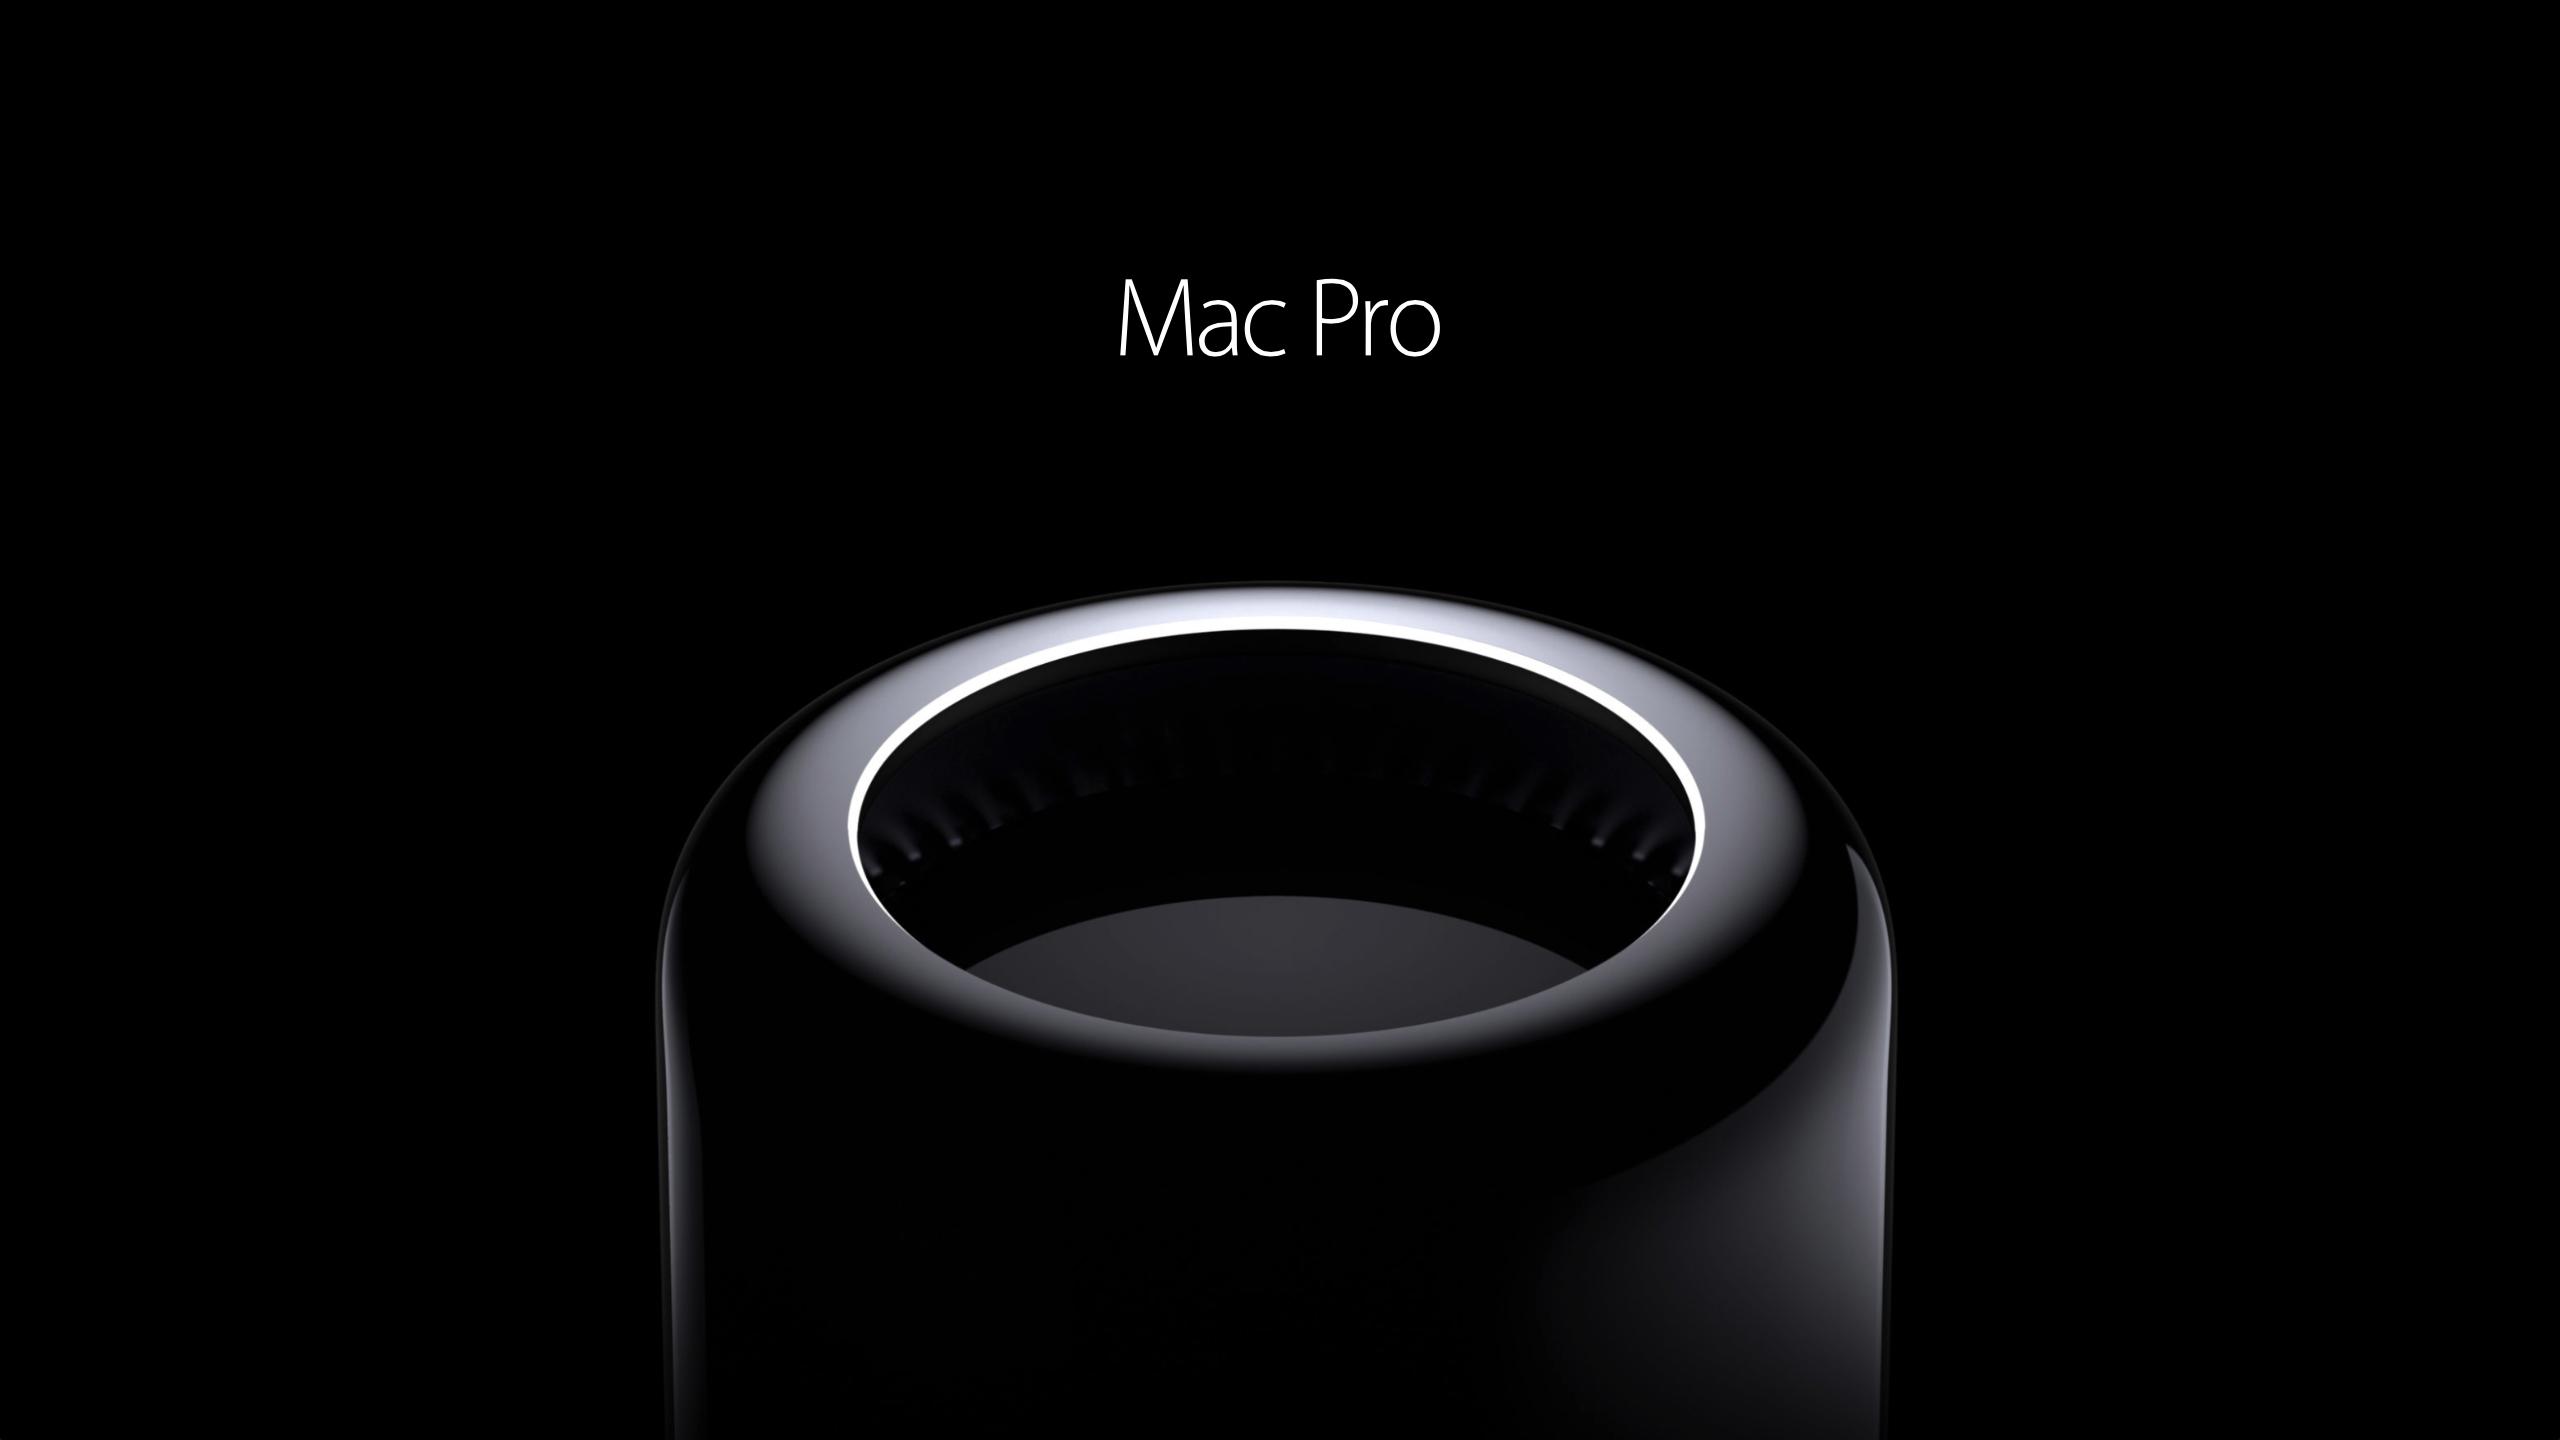 Mac Pro Background